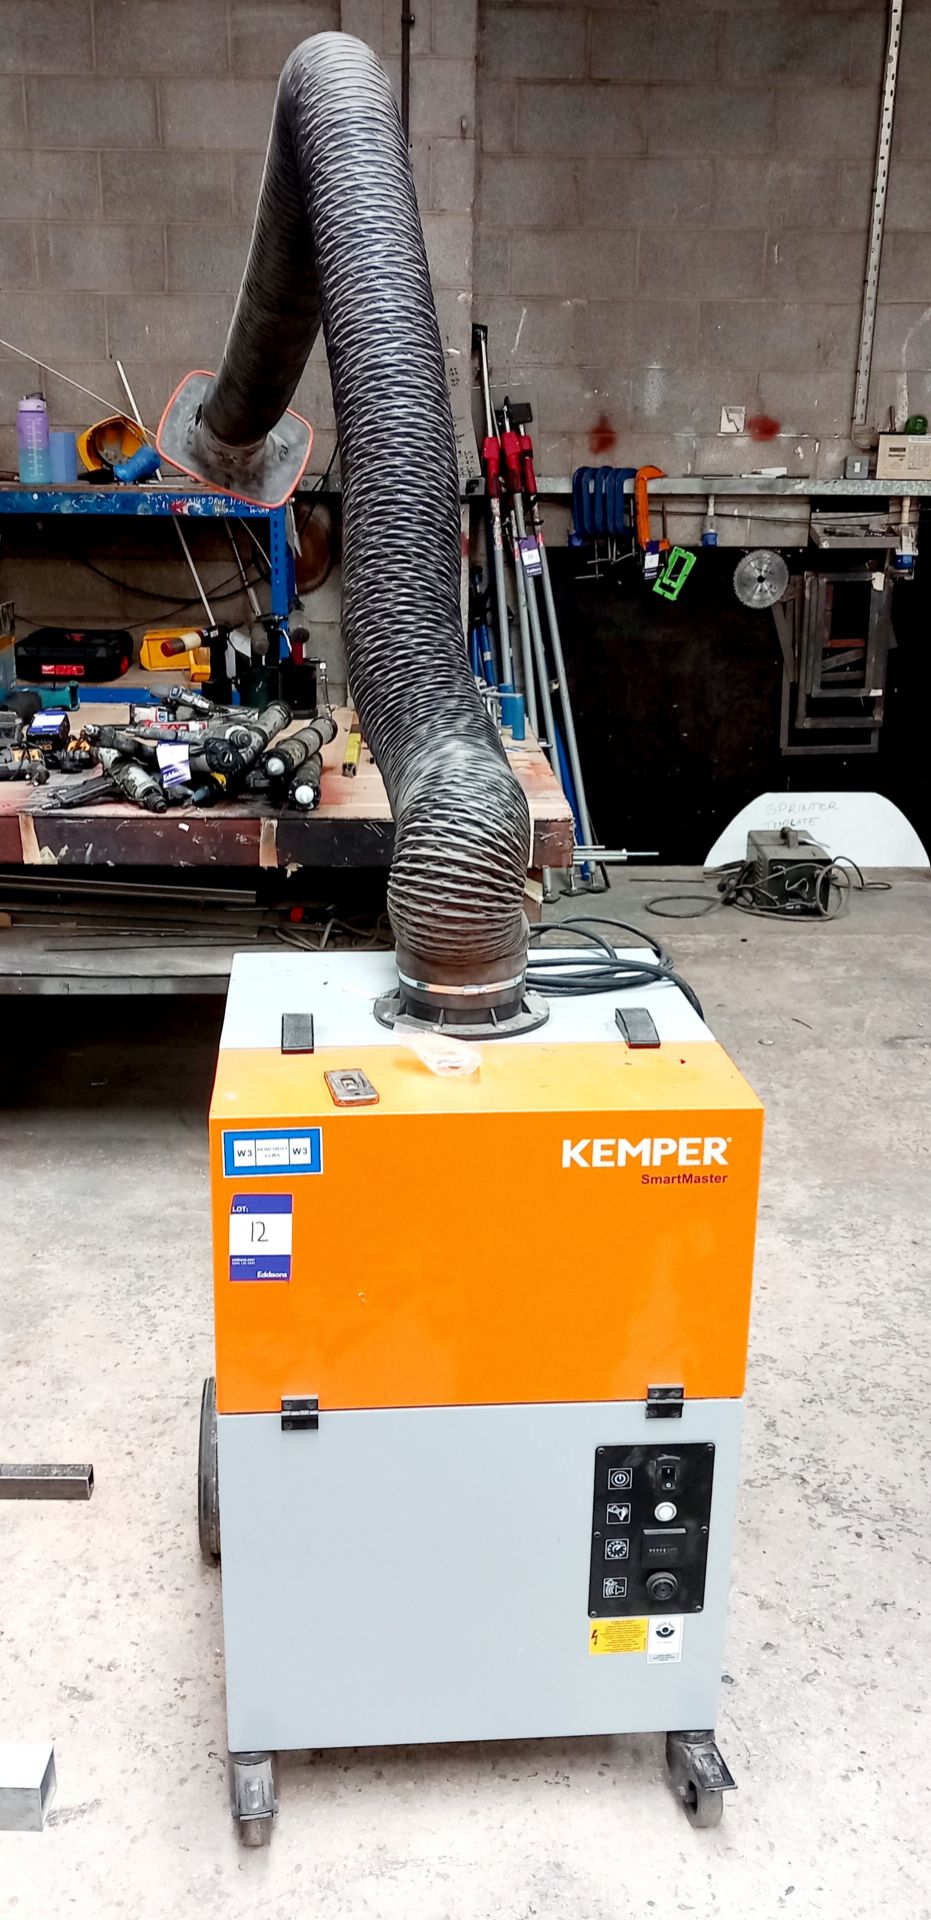 Kemper Smartmaster Mobile Fume Extractor